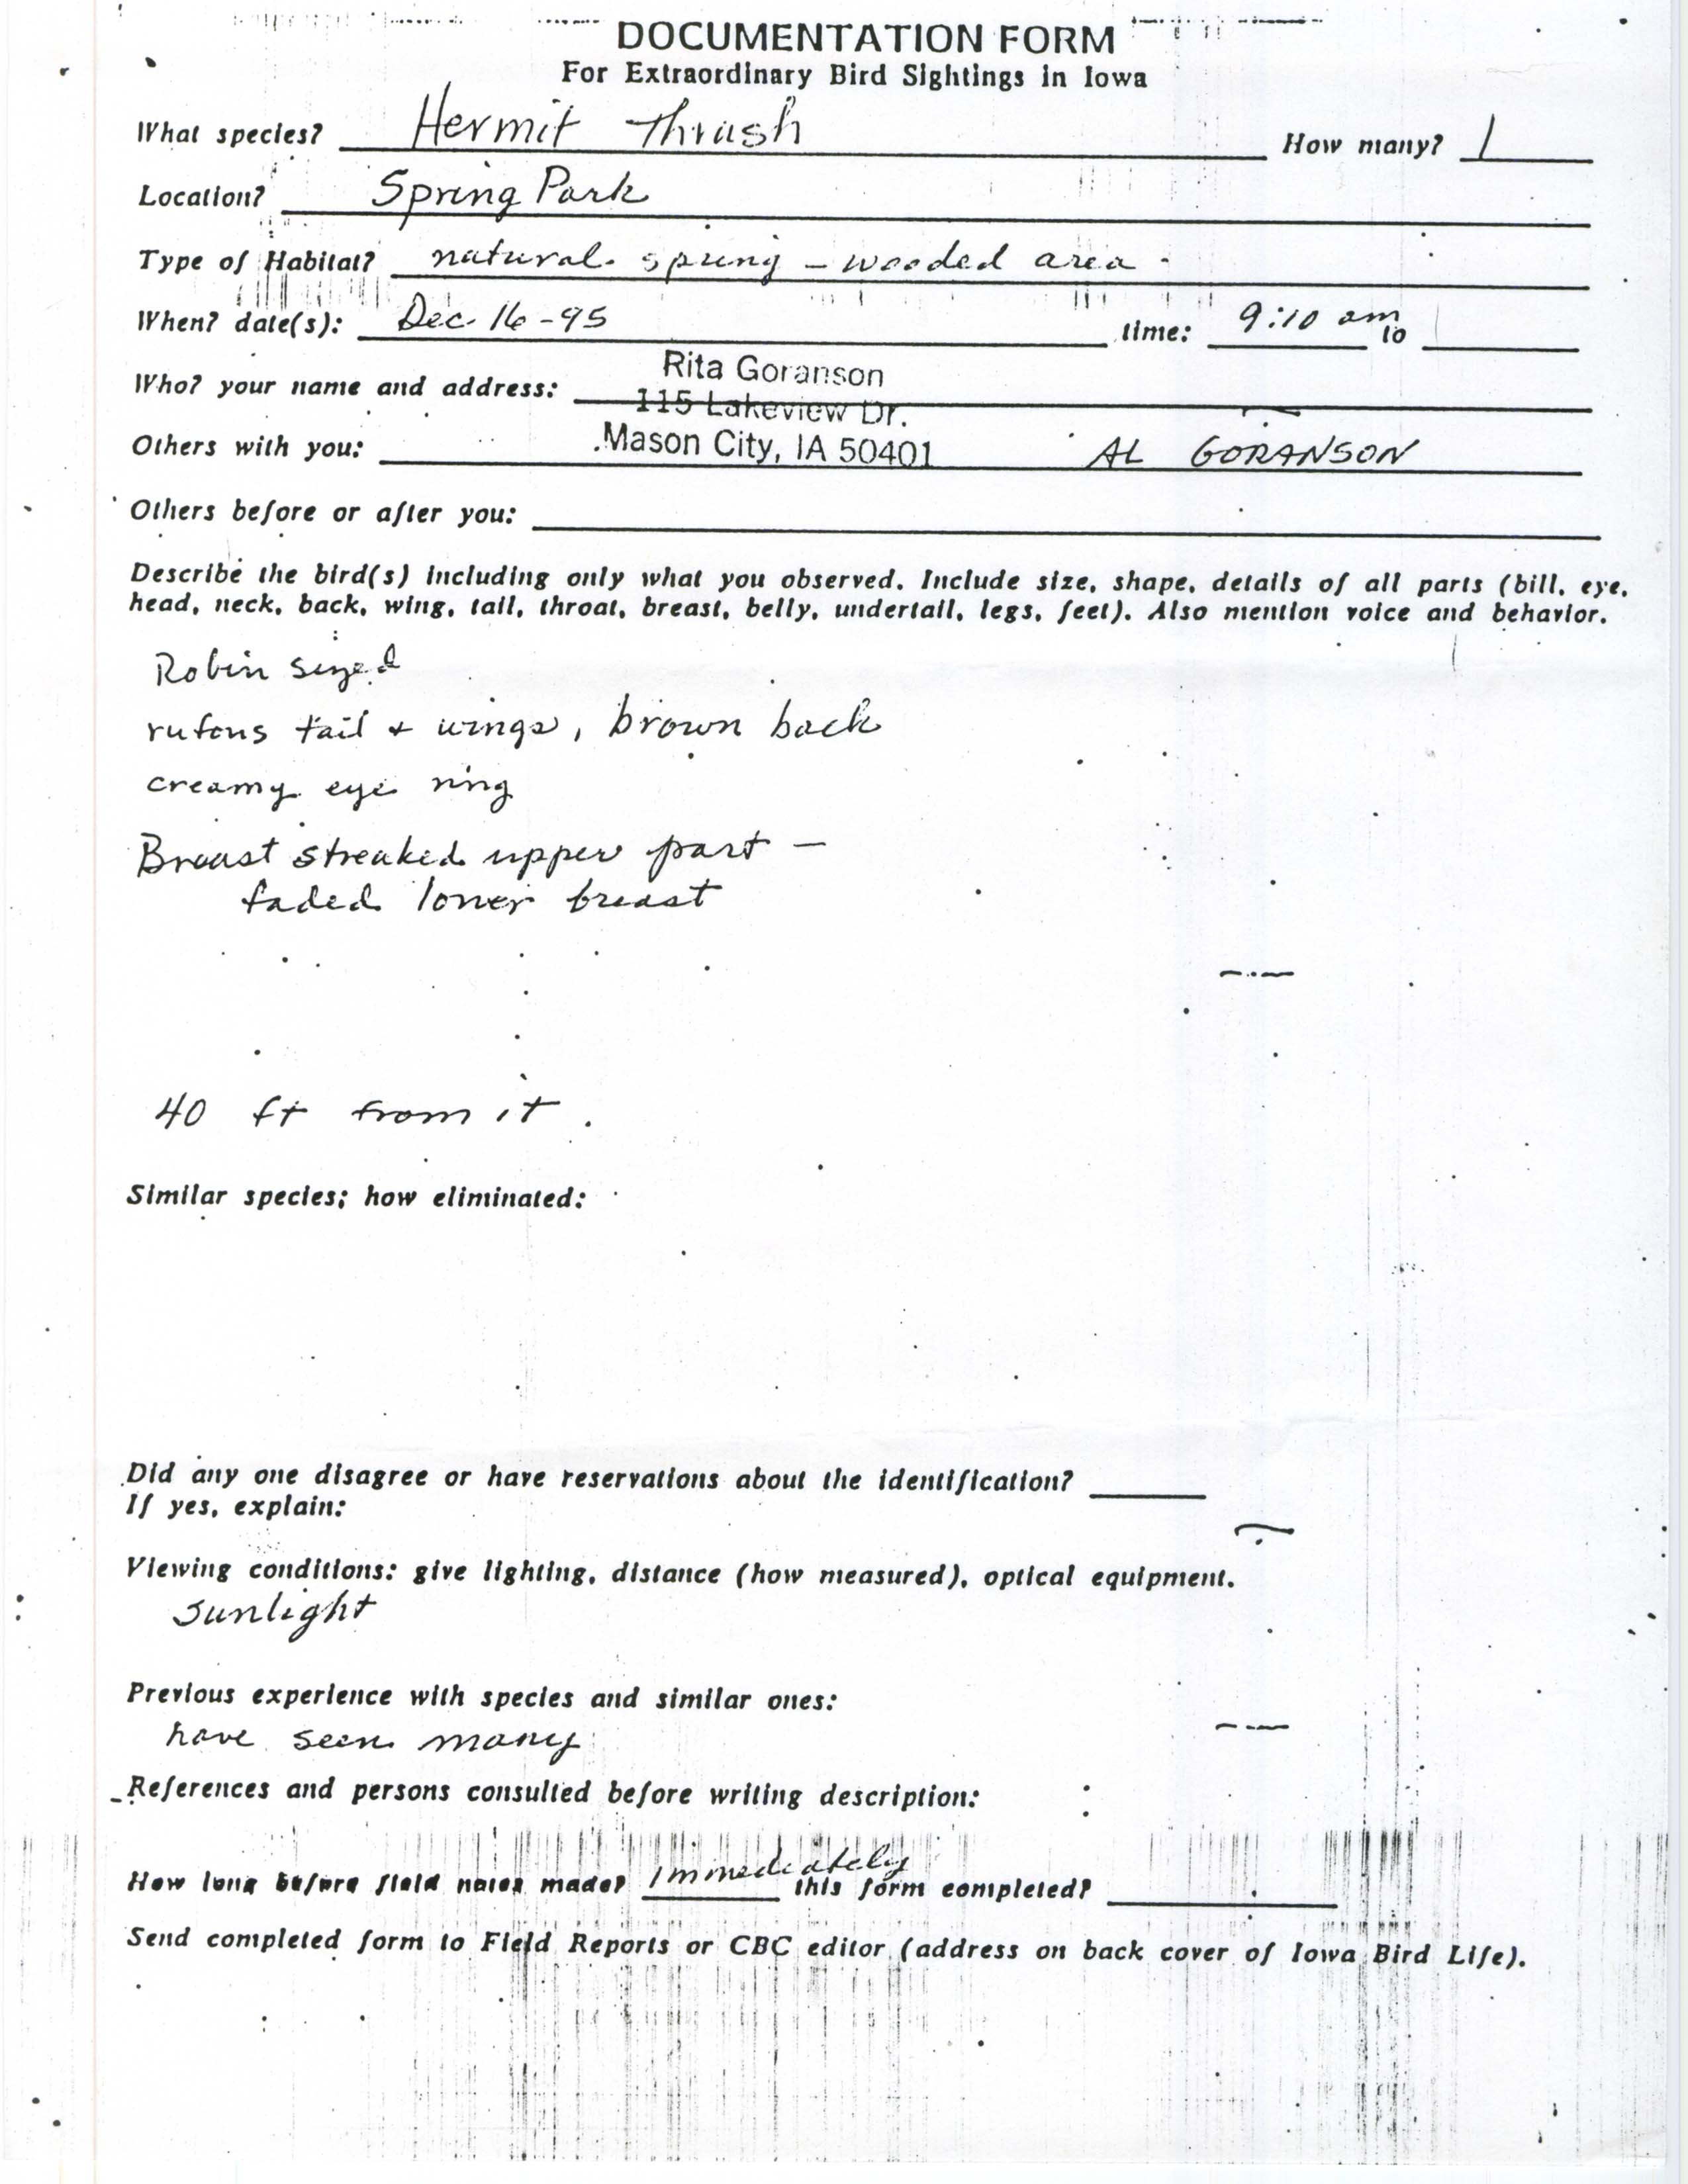 Rare bird documentation form for Hermit Thrush at Spring Park, 1995